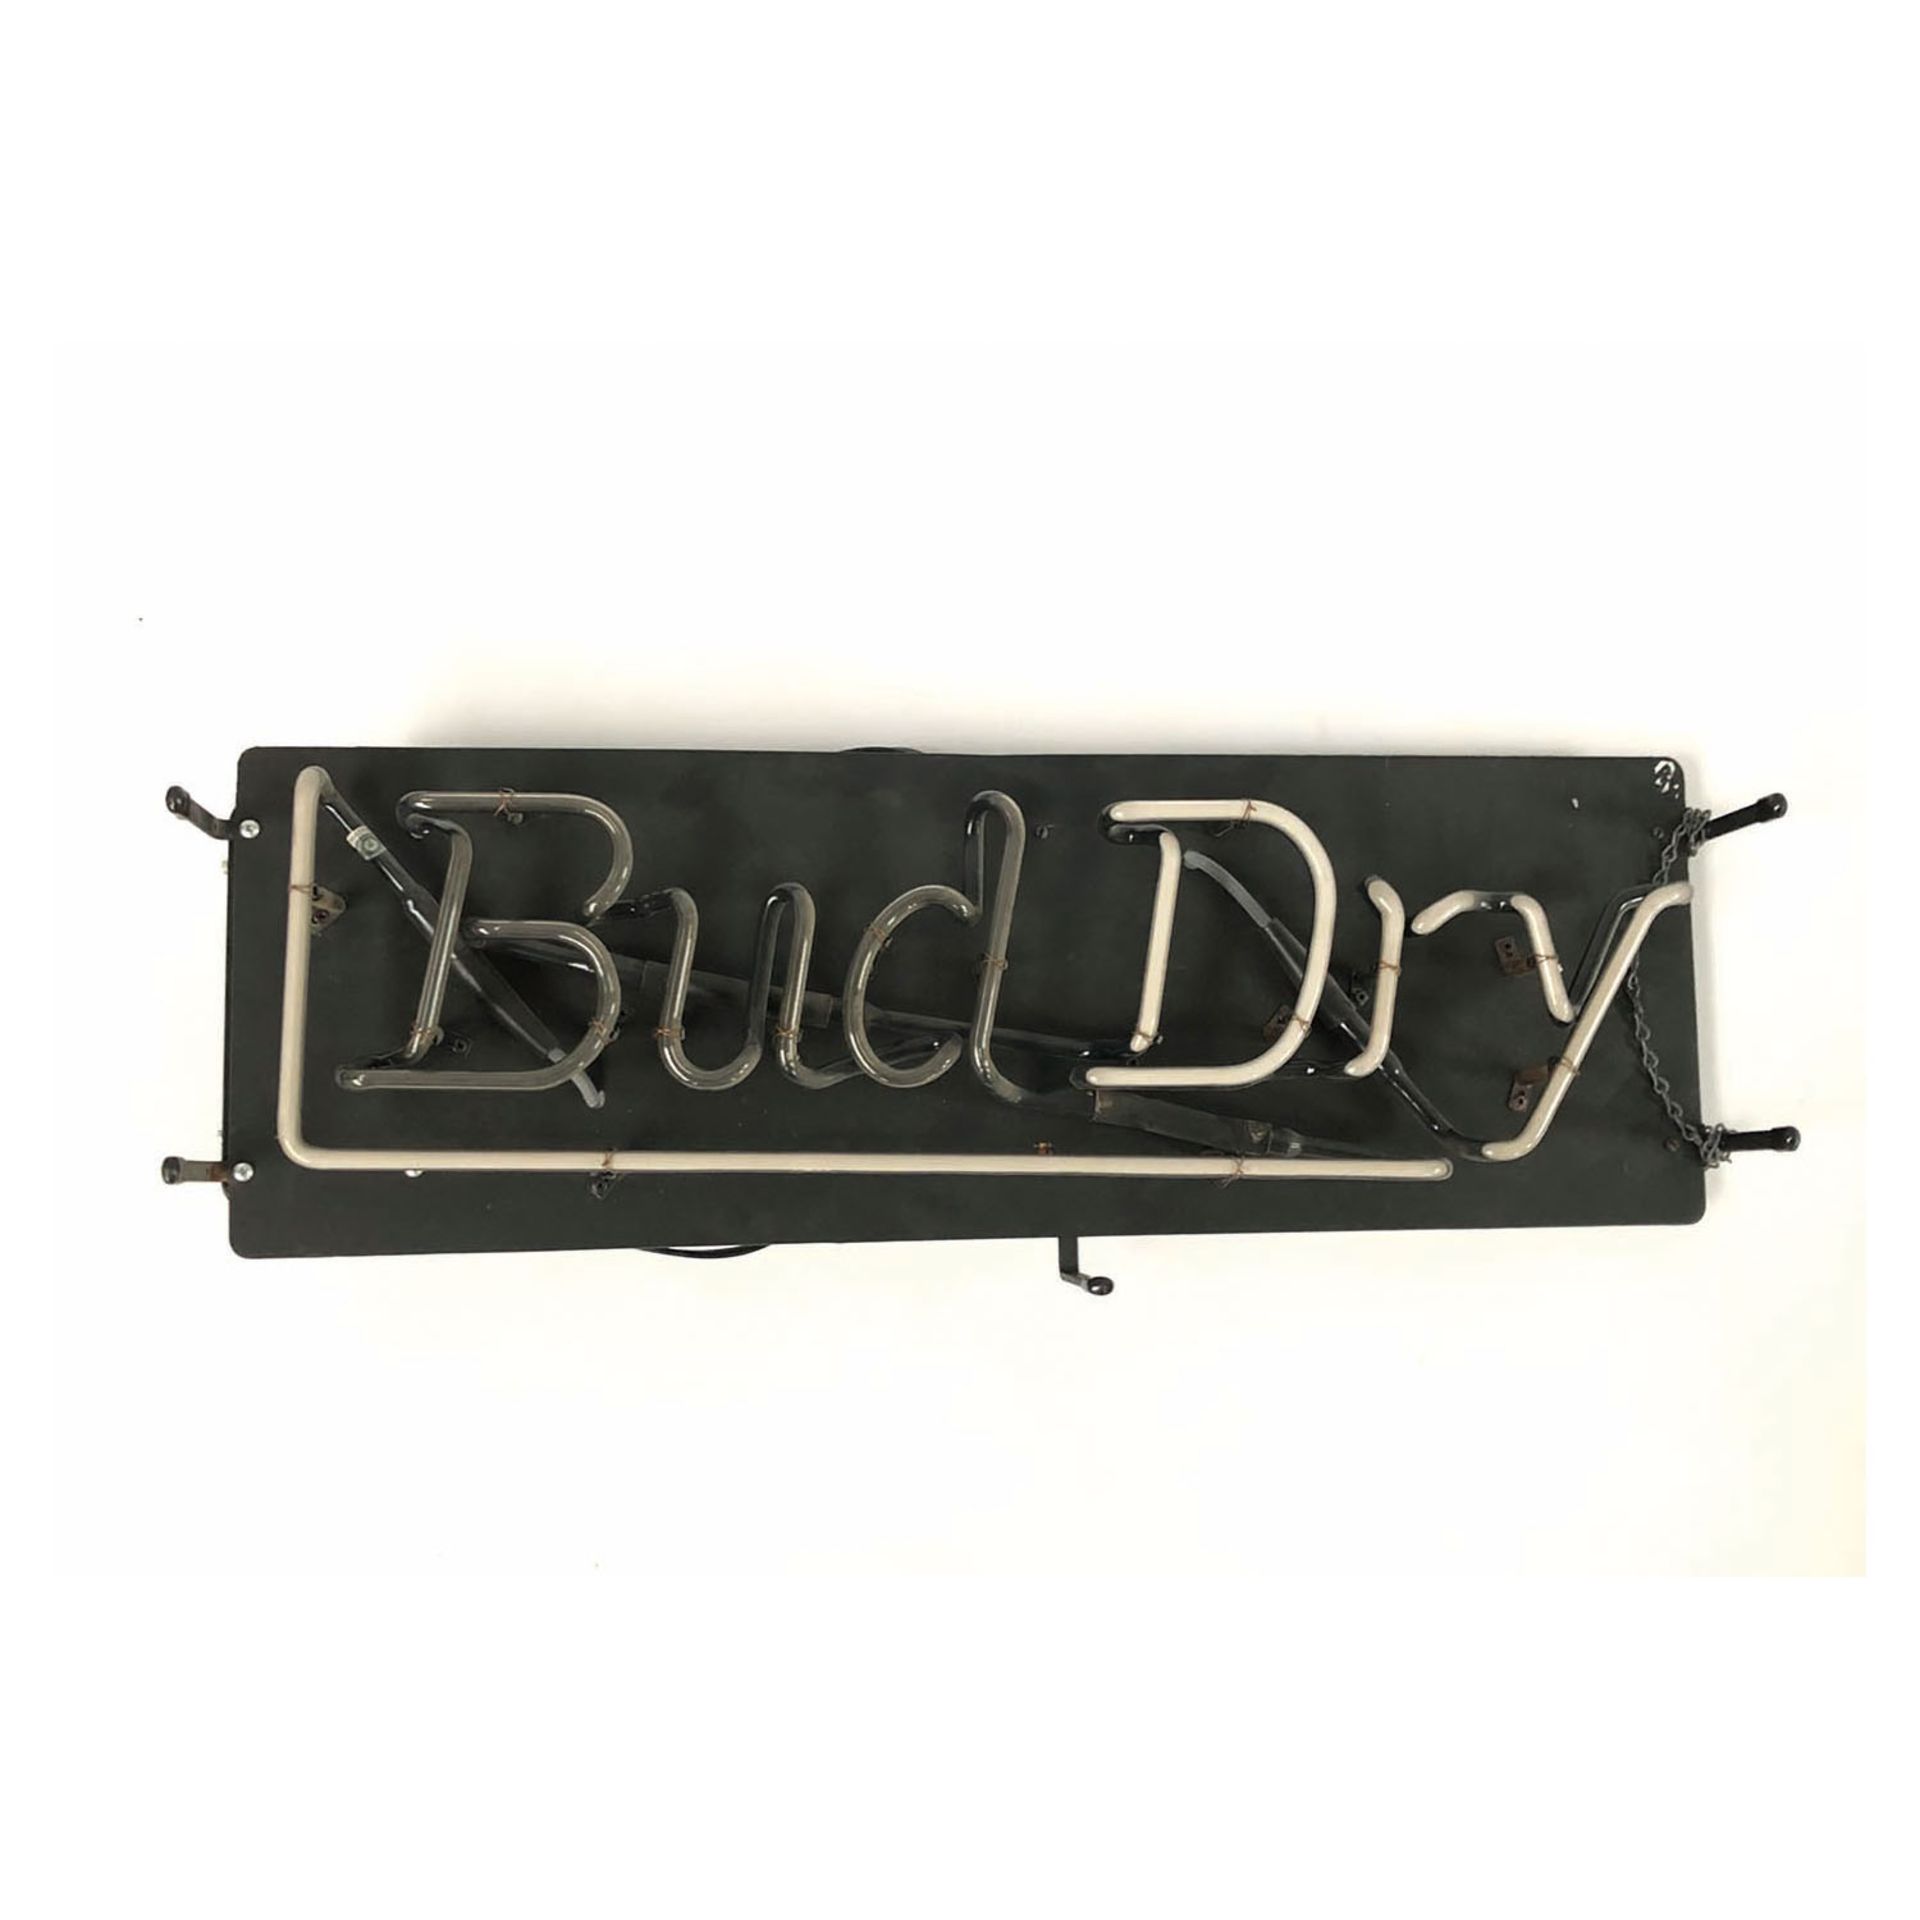 Original Bud Dry Neon Sign - Image 2 of 2